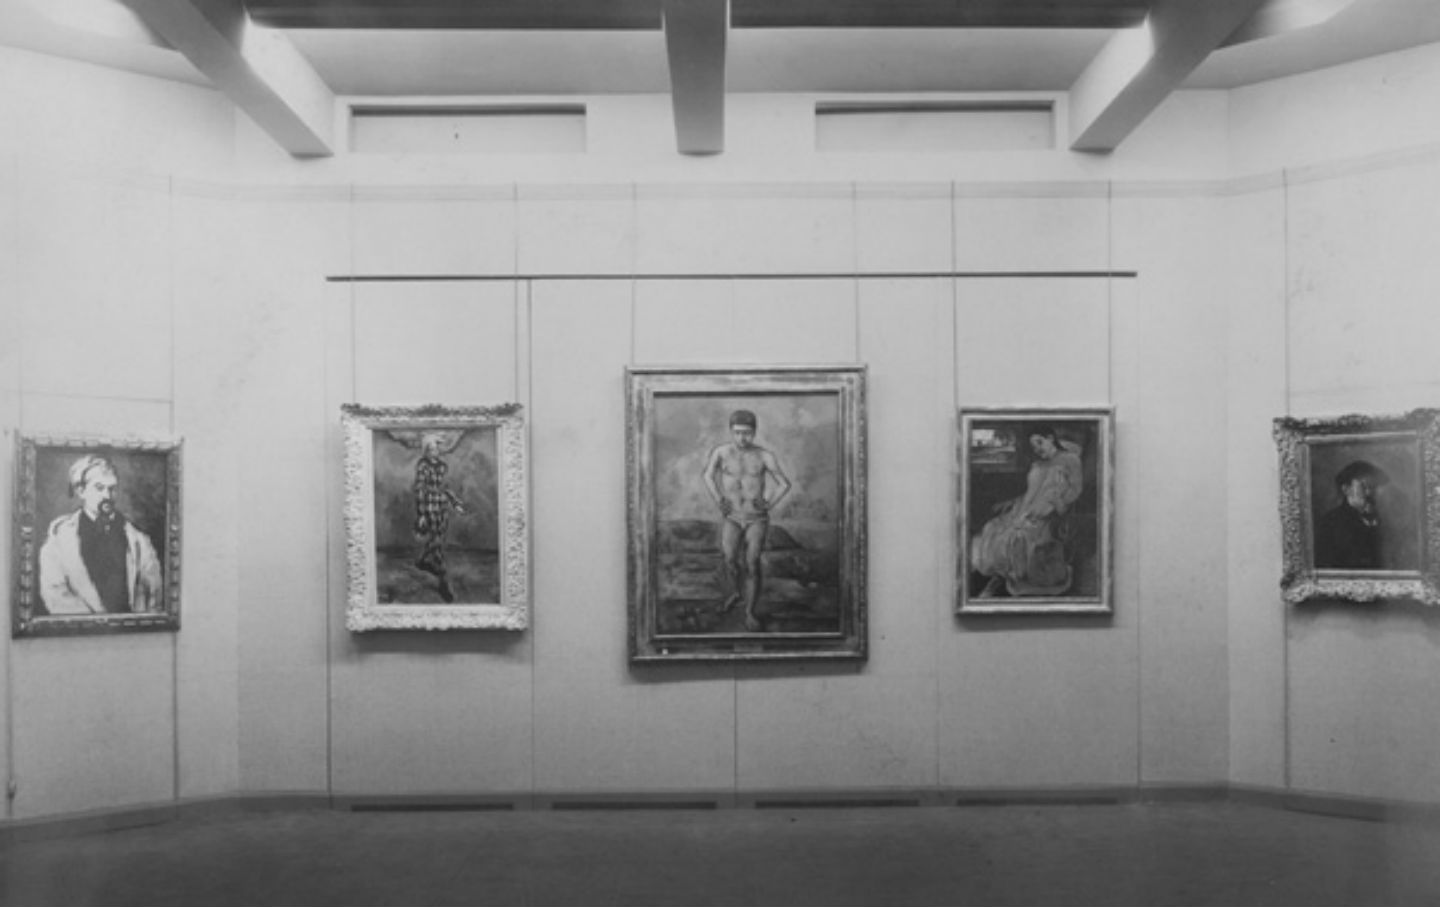 November 7, 1929: The Museum of Modern Art Opens in New York City